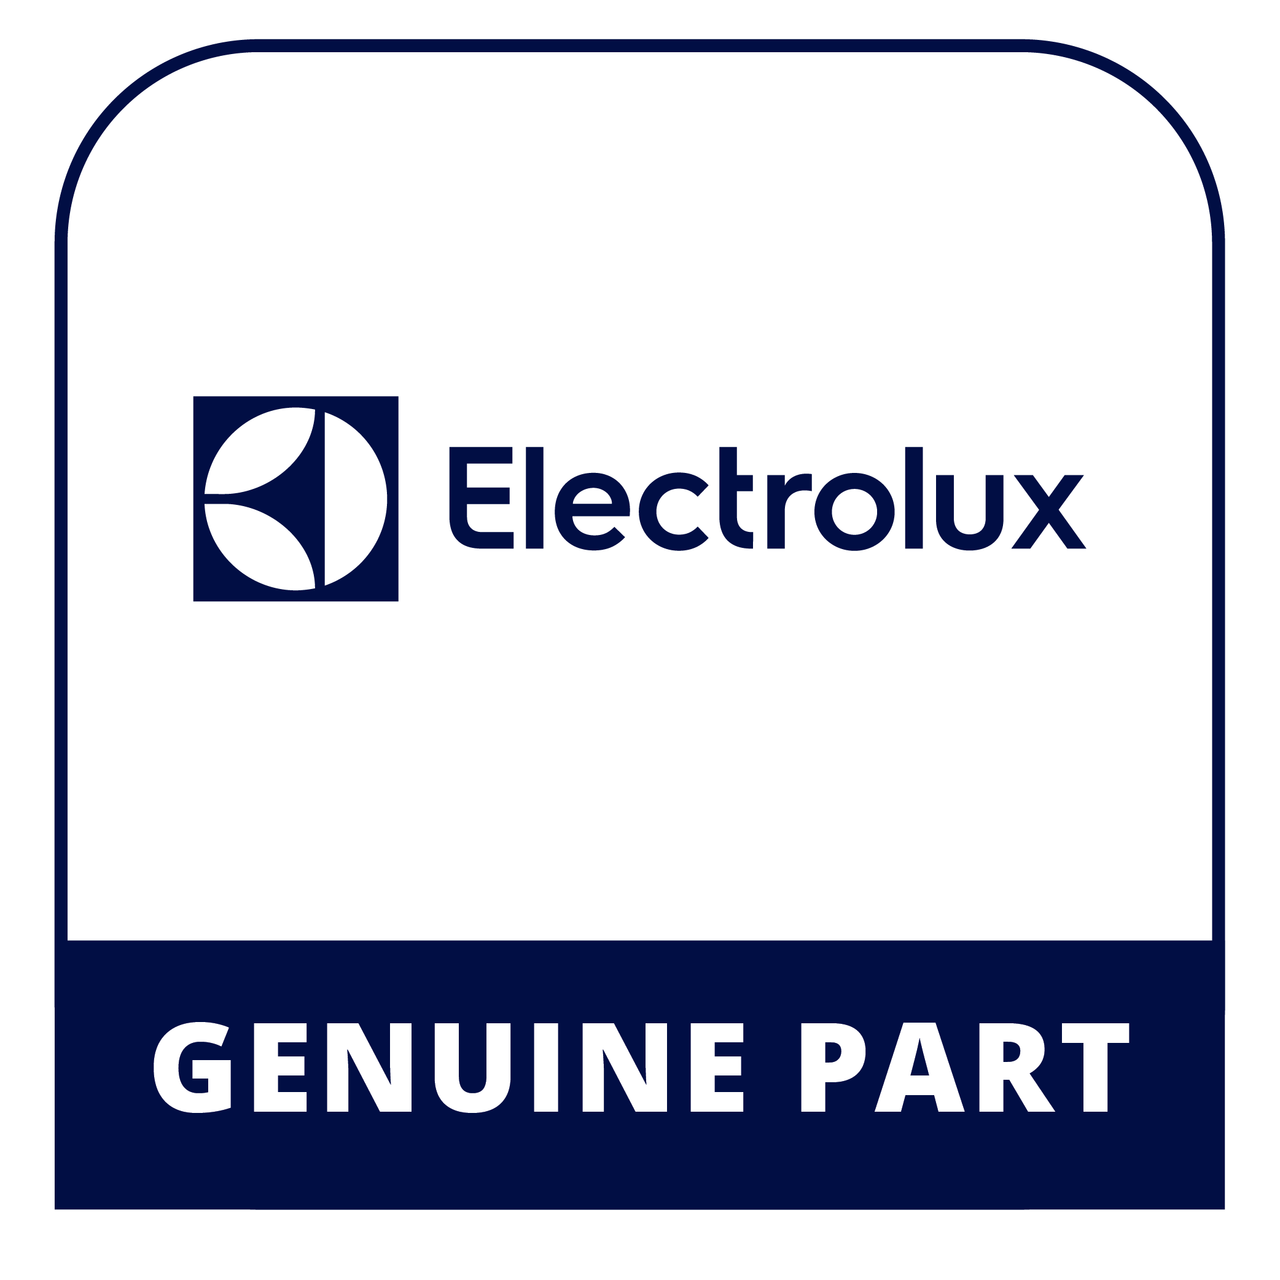 Frigidaire - Electrolux 318111820 Plate - Genuine Electrolux Part